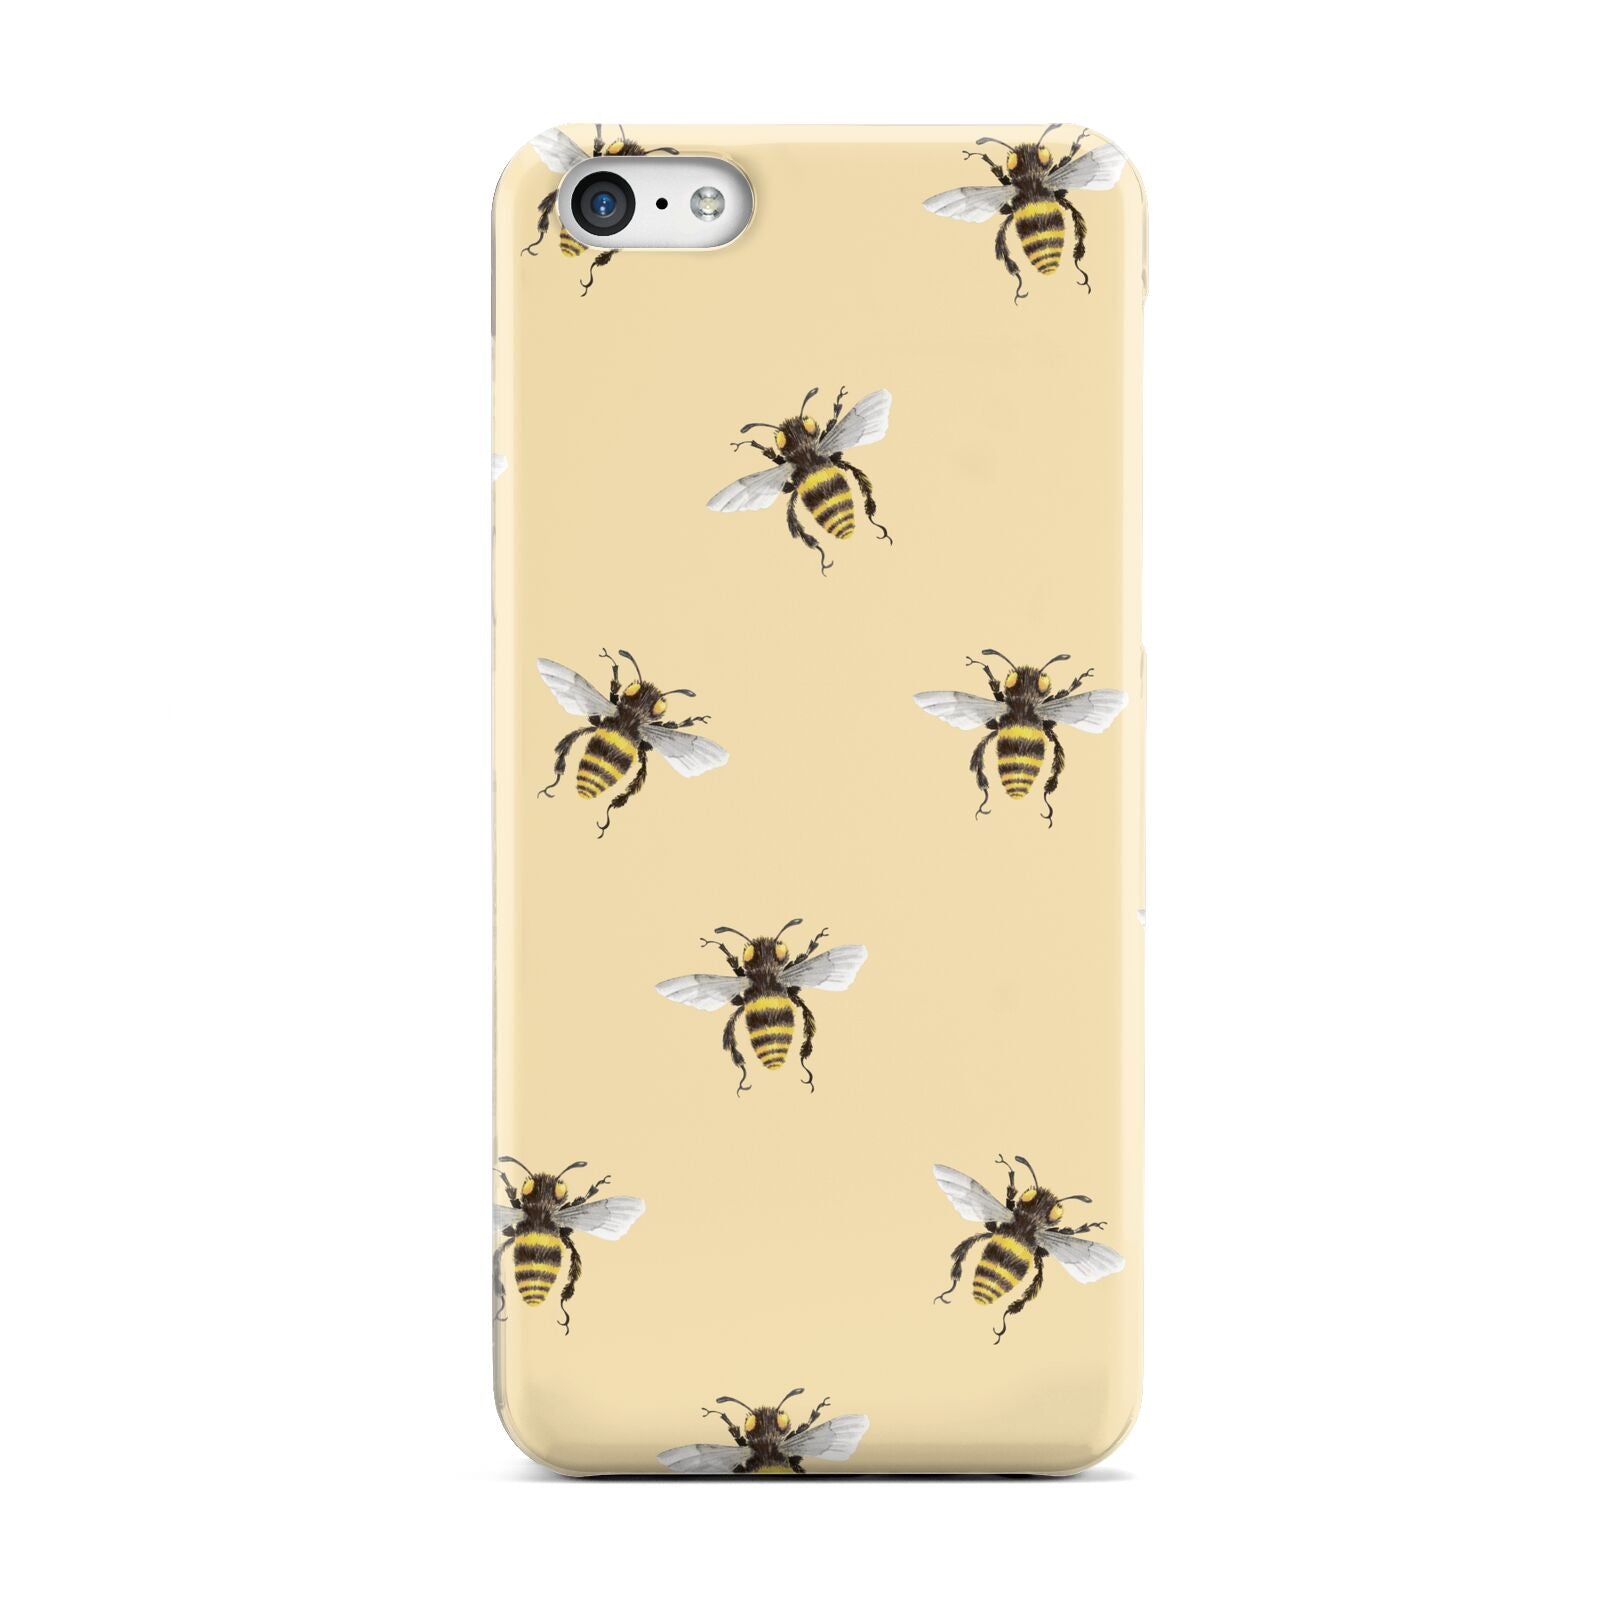 Bee Illustrations Apple iPhone 5c Case